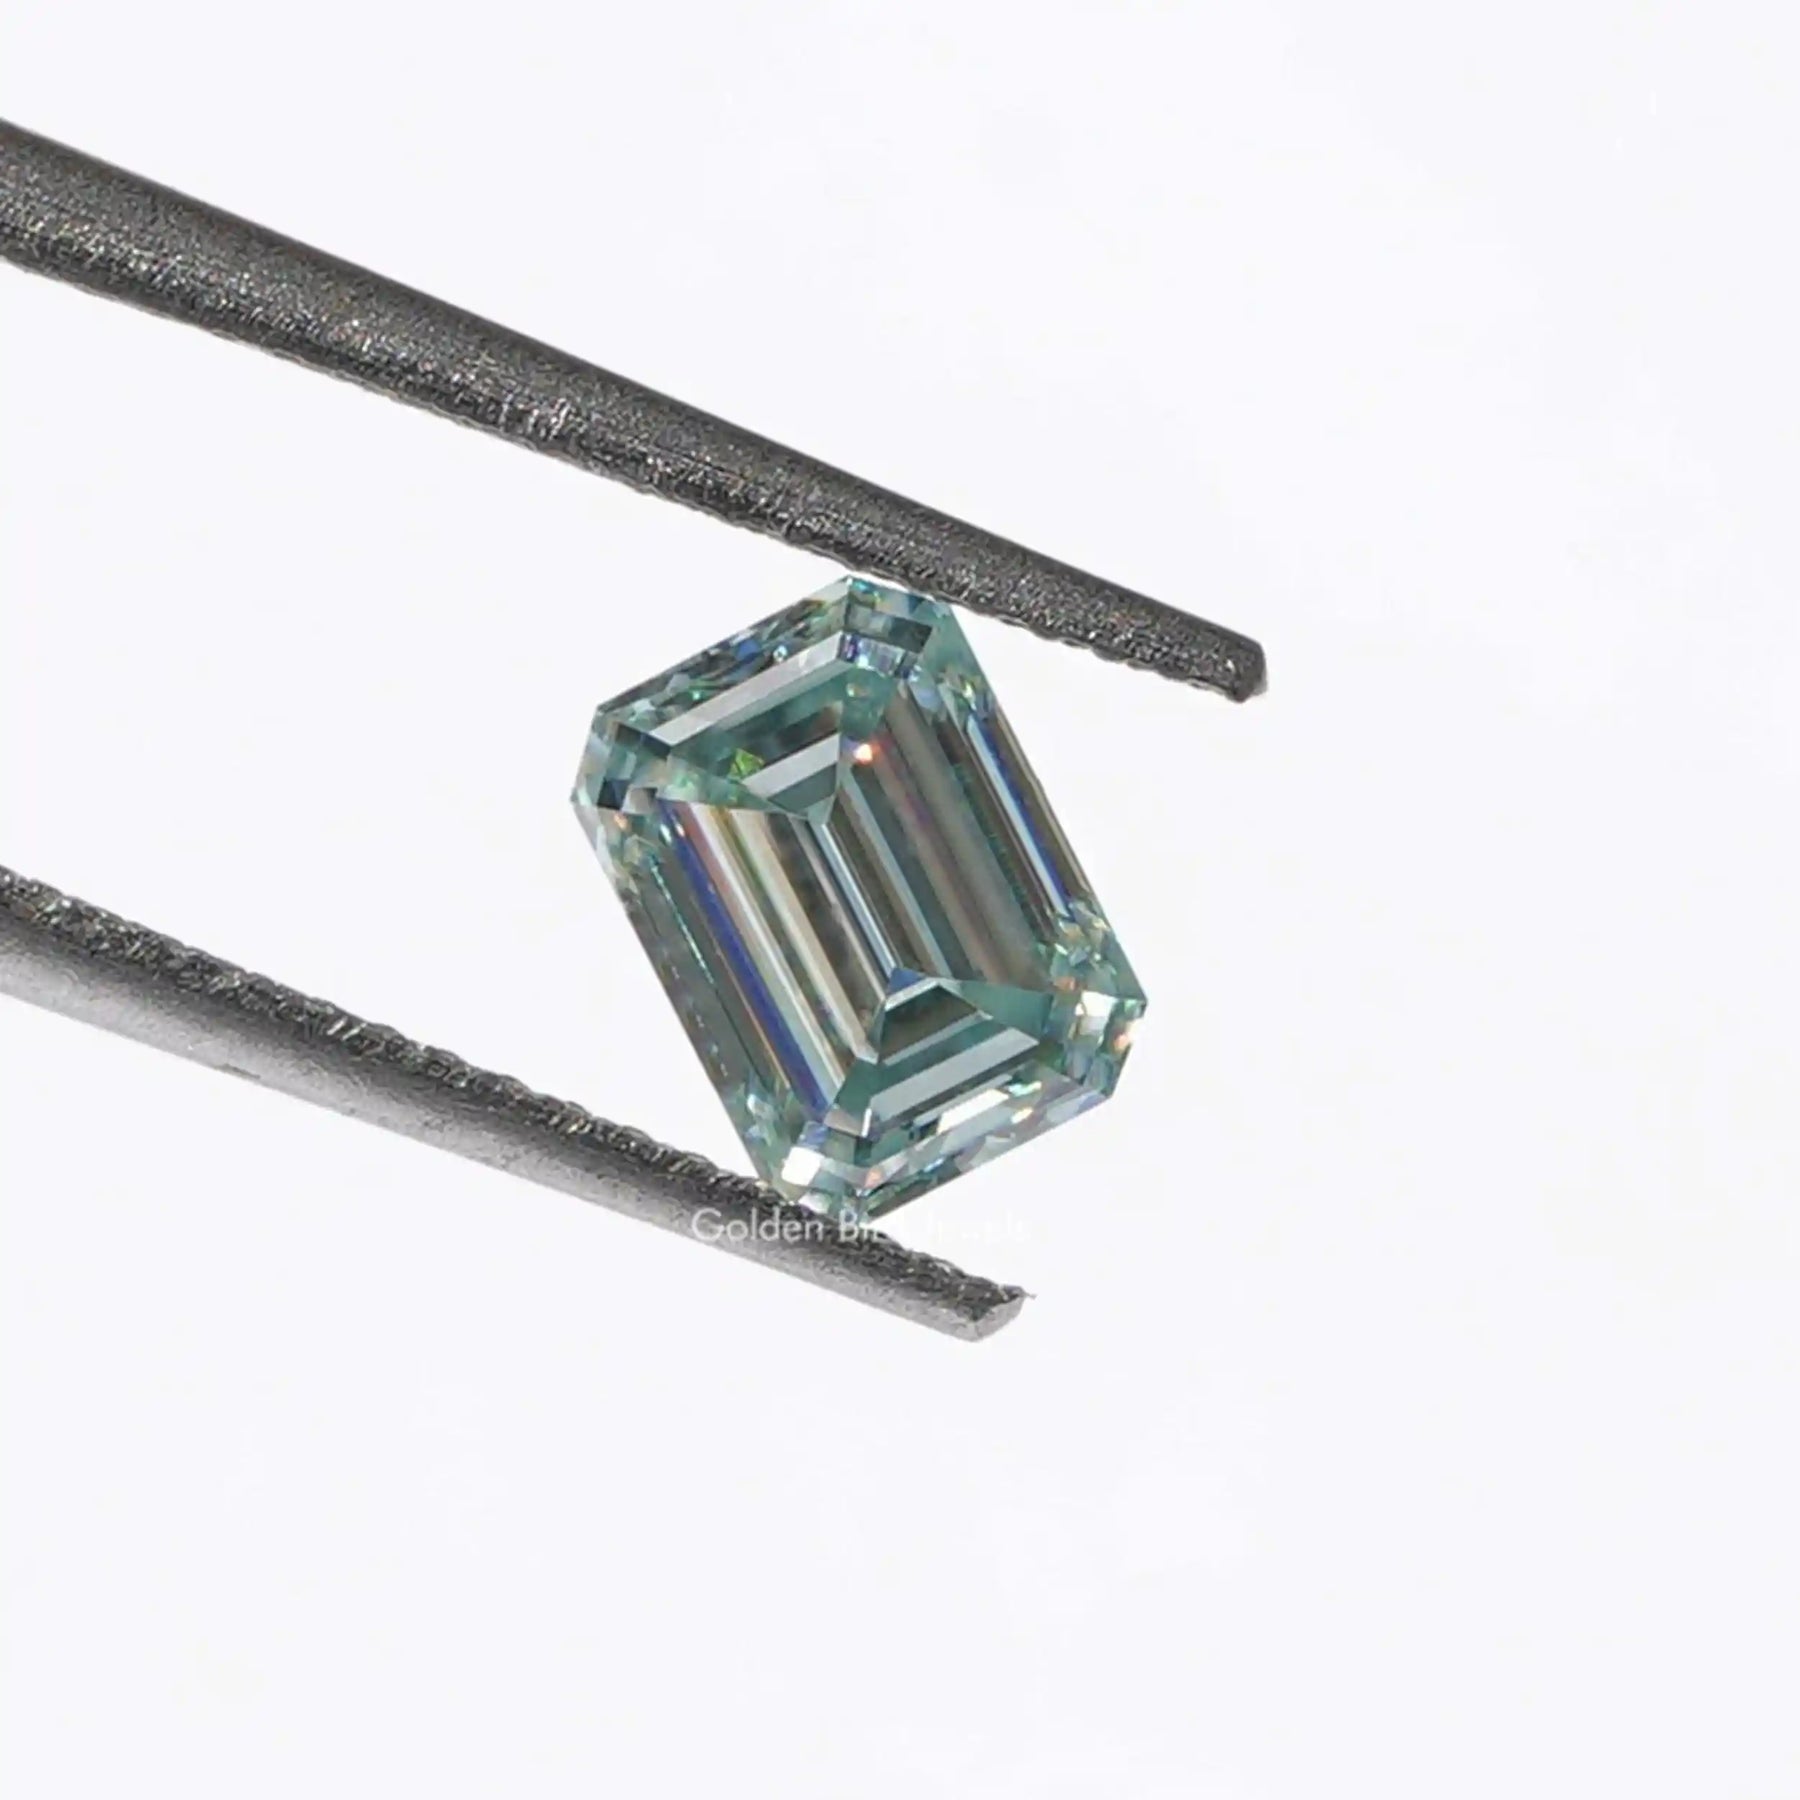 [This aqua blue emerald cut loose stone made of vs clarity ]-[Golden Bird Jewels]